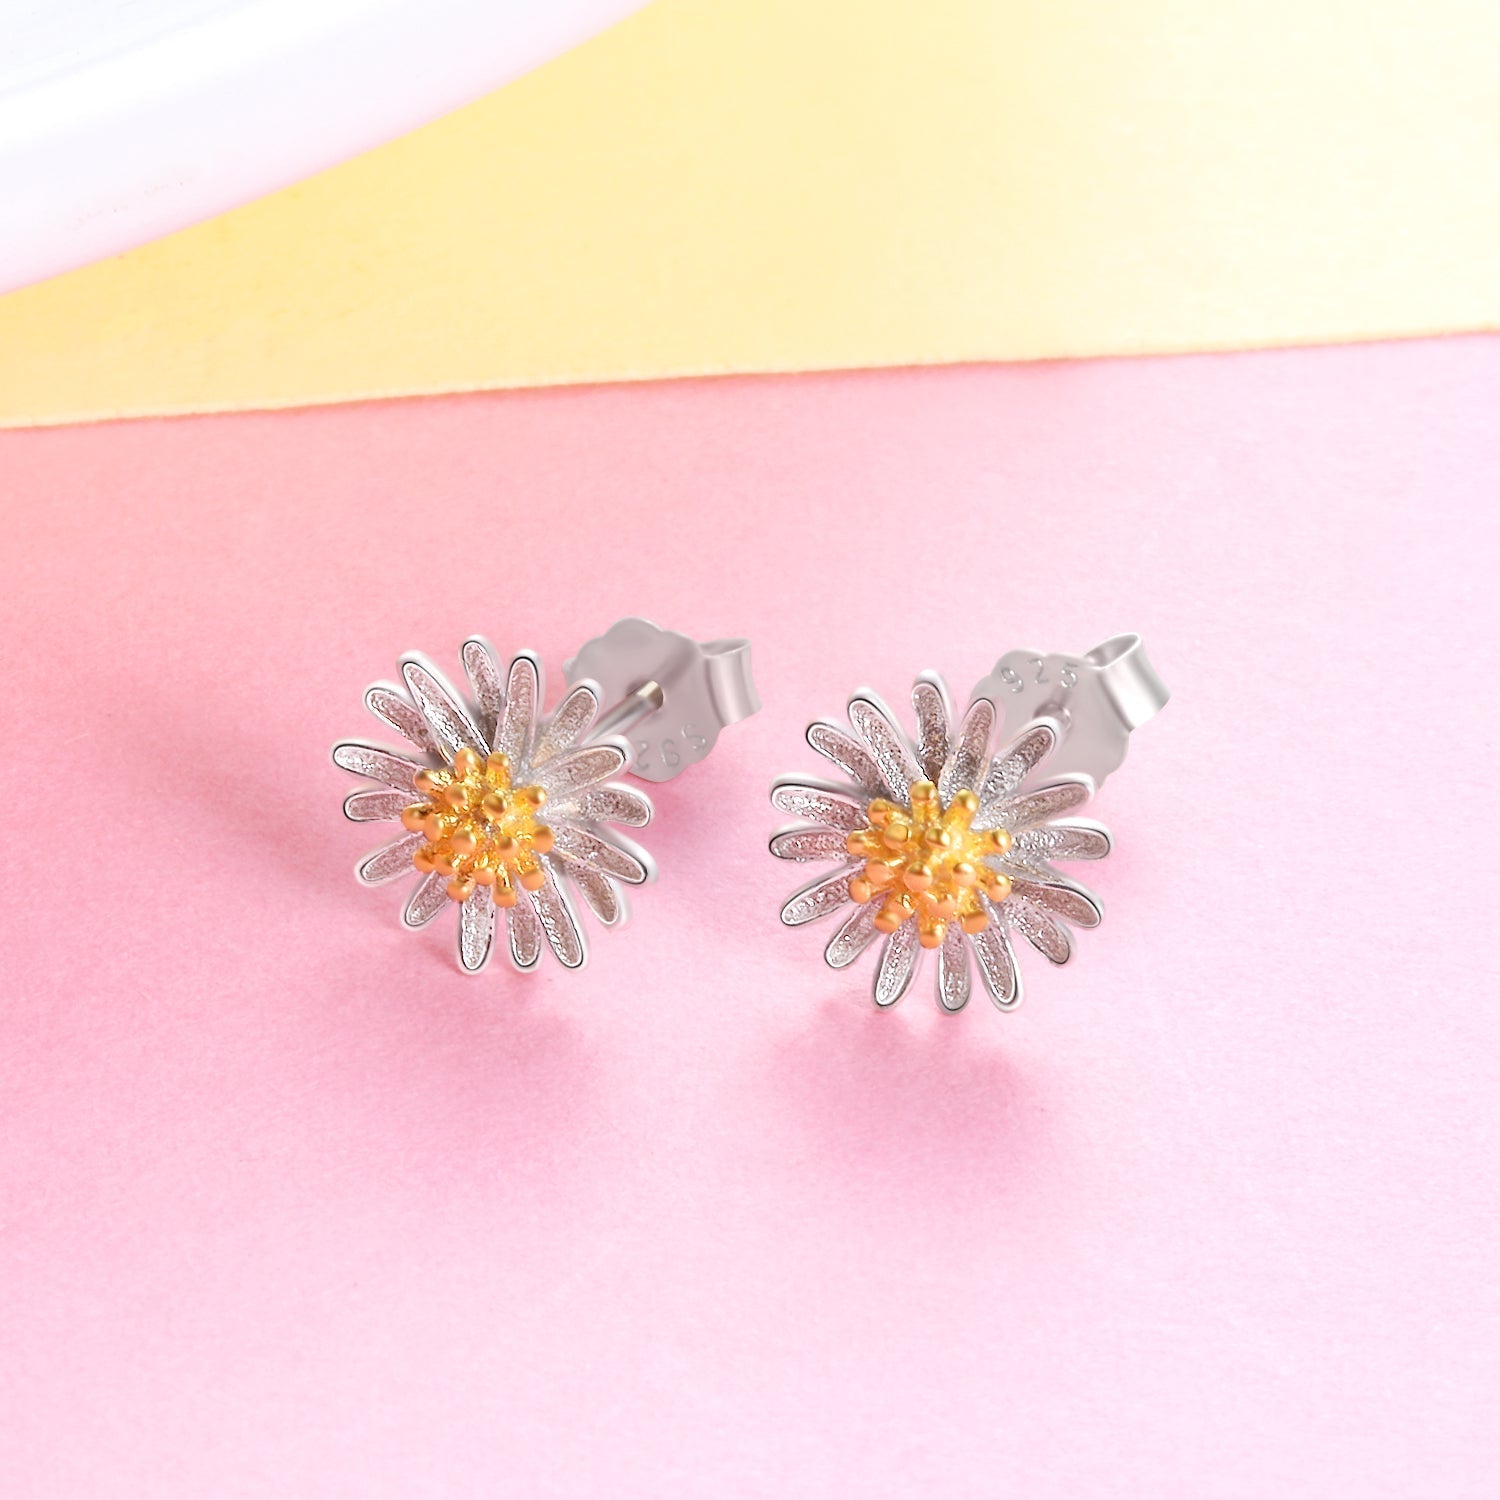 Solid Sterling Silver Sunflower Earrings - Tuesday Morning-Stud Earrings